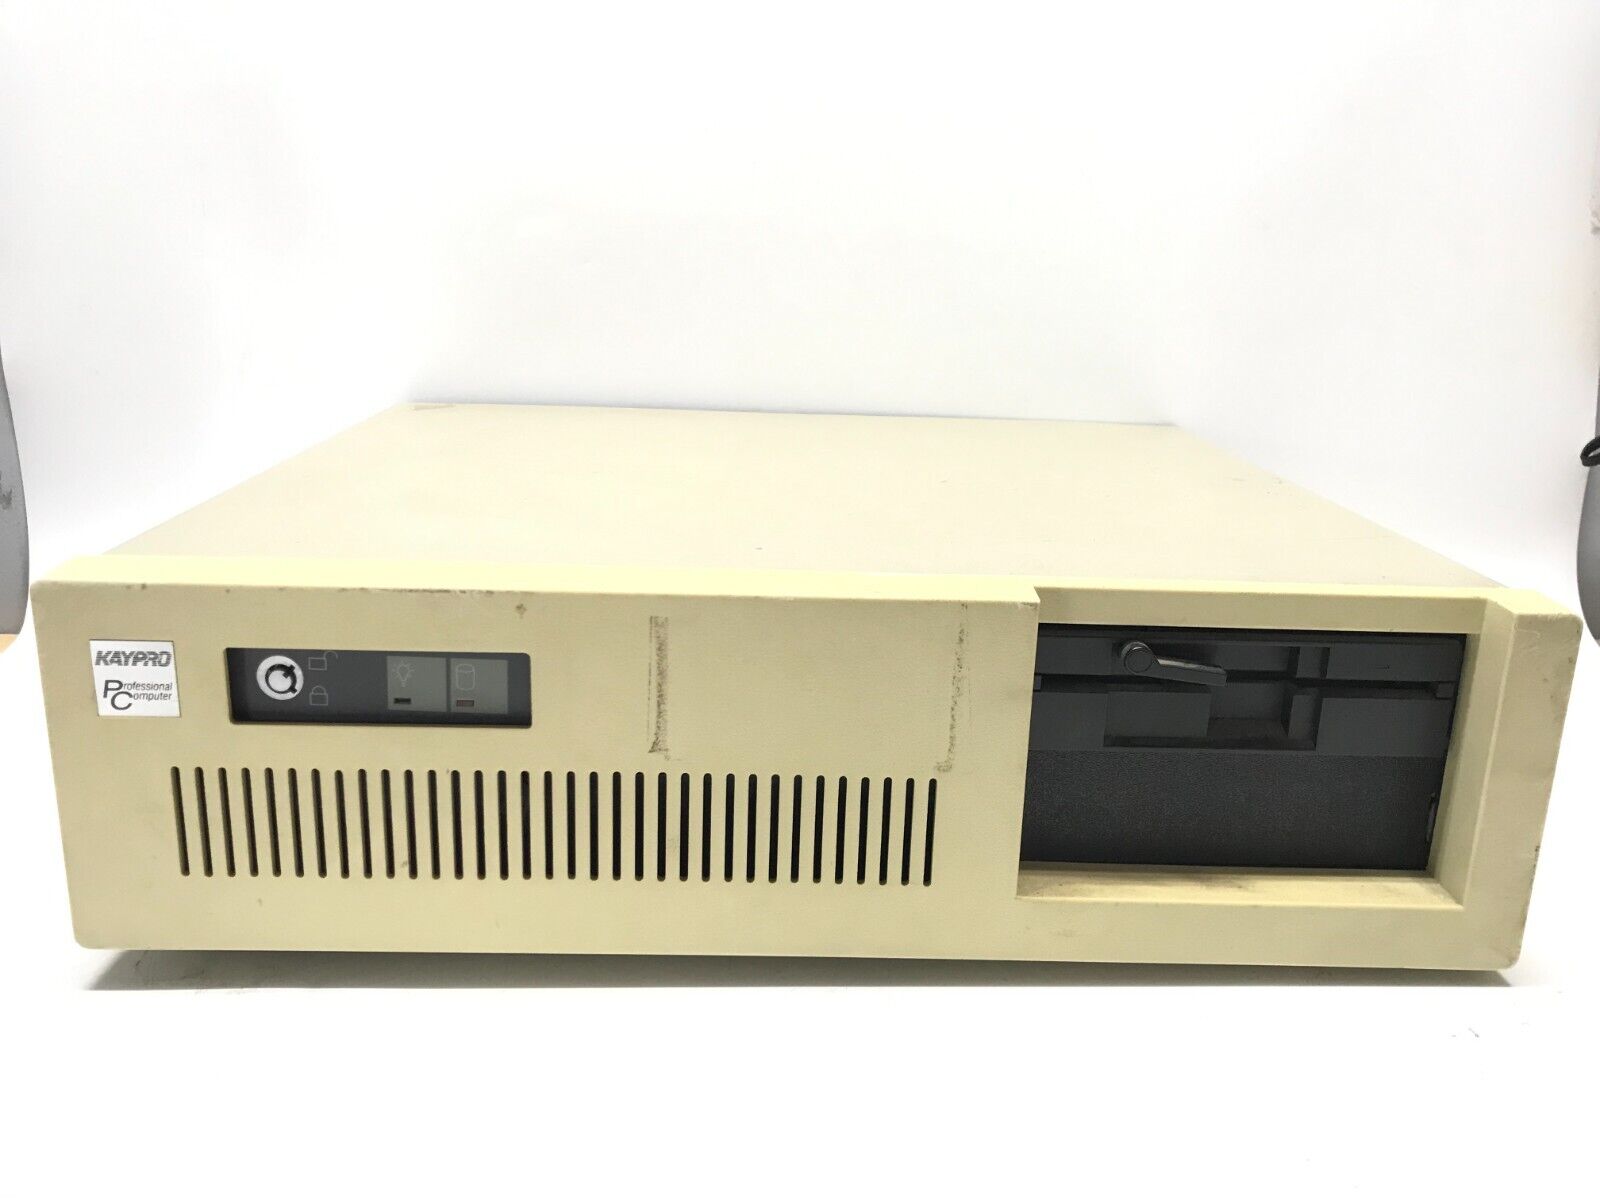 Vintage Kaypro PC Professional Computer